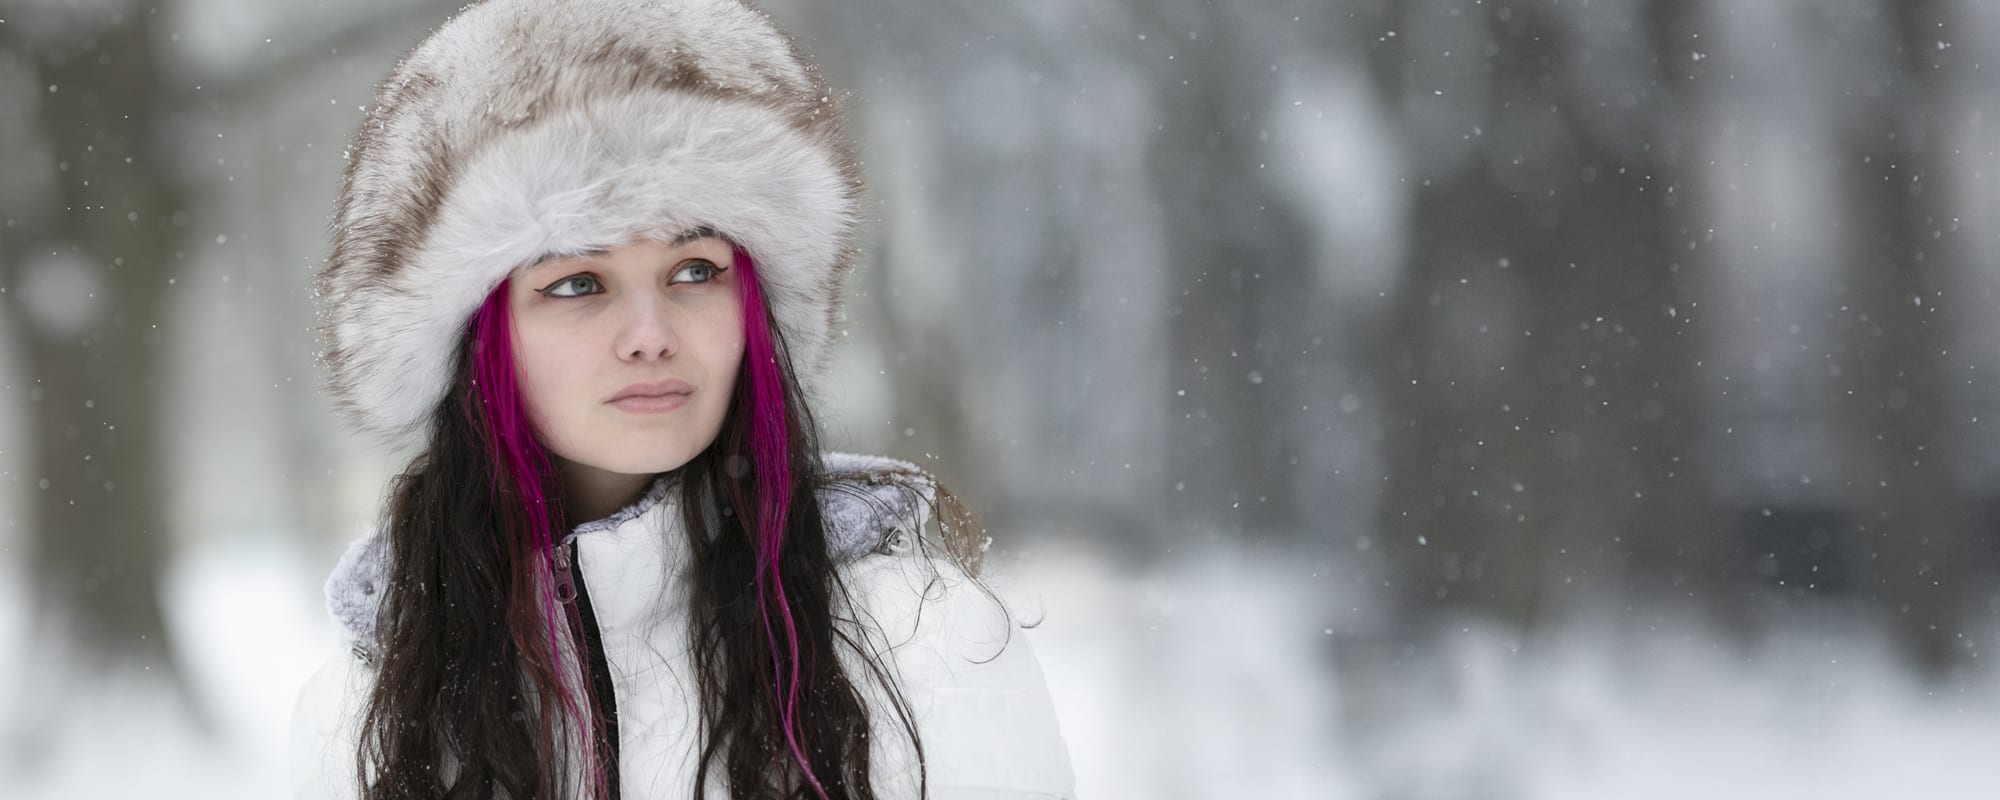 Fur hat girl in snowfall